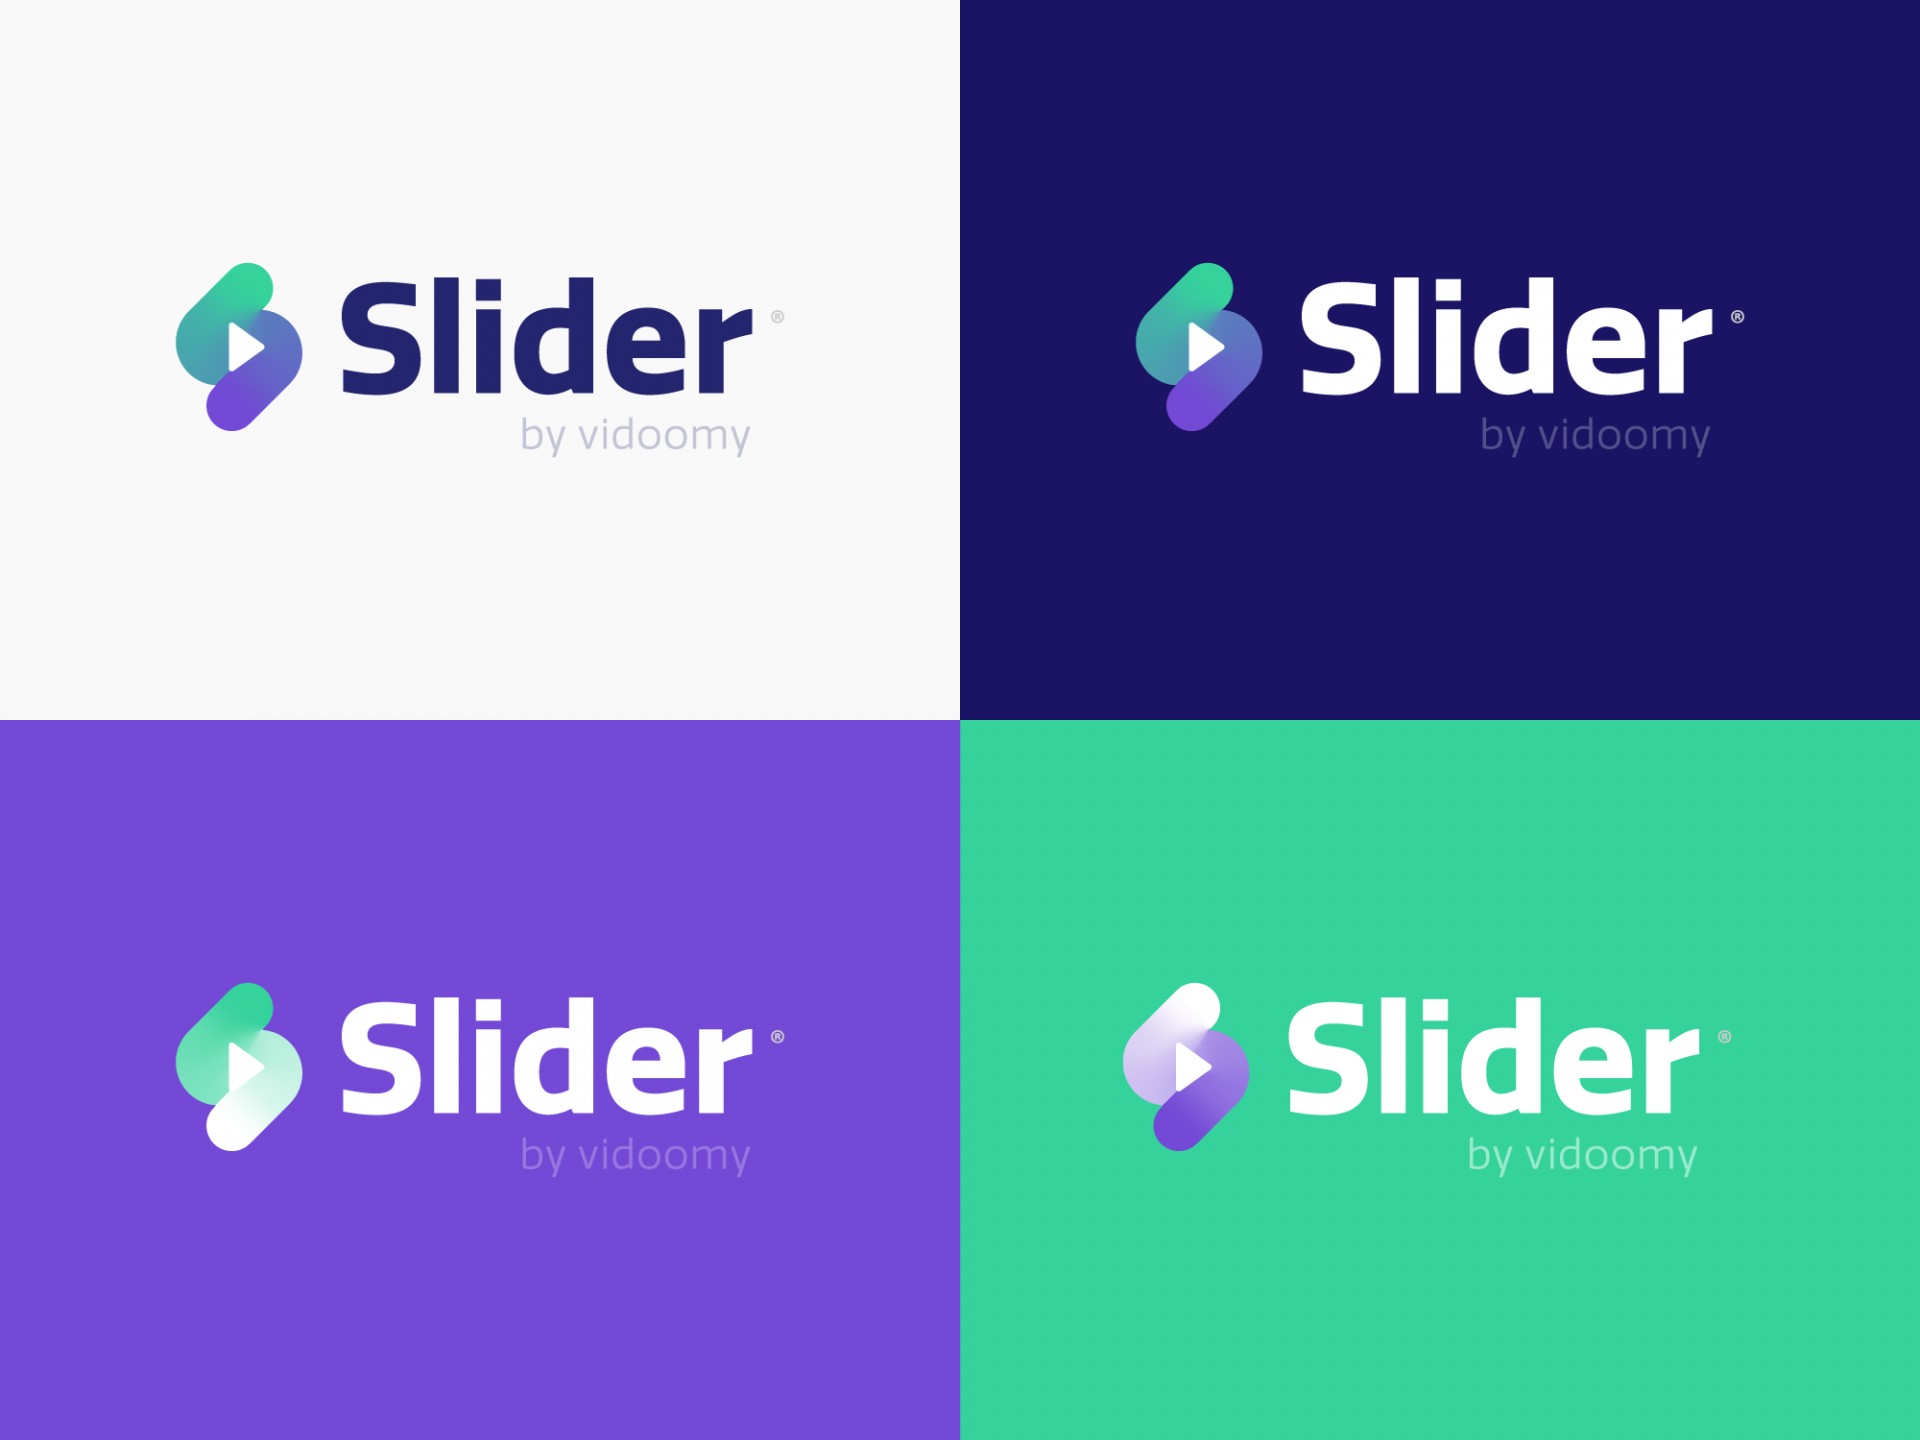 Diseño de logo slider by vidoomy